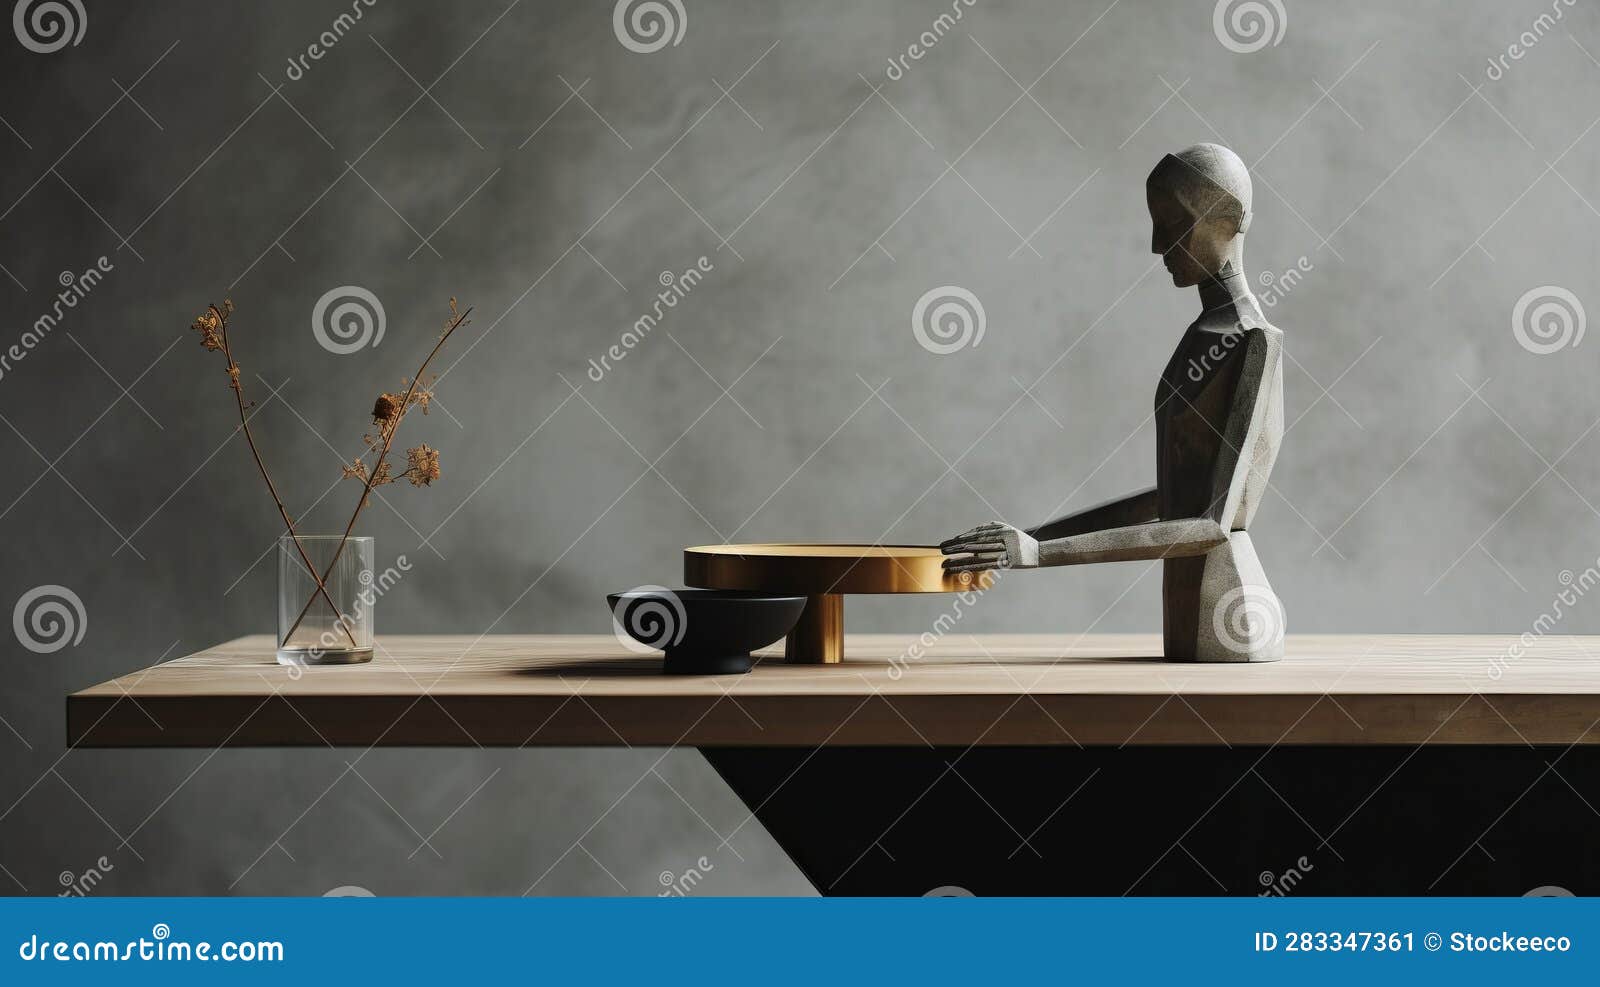 futuristic minimalism: wooden statue on a minimalist table